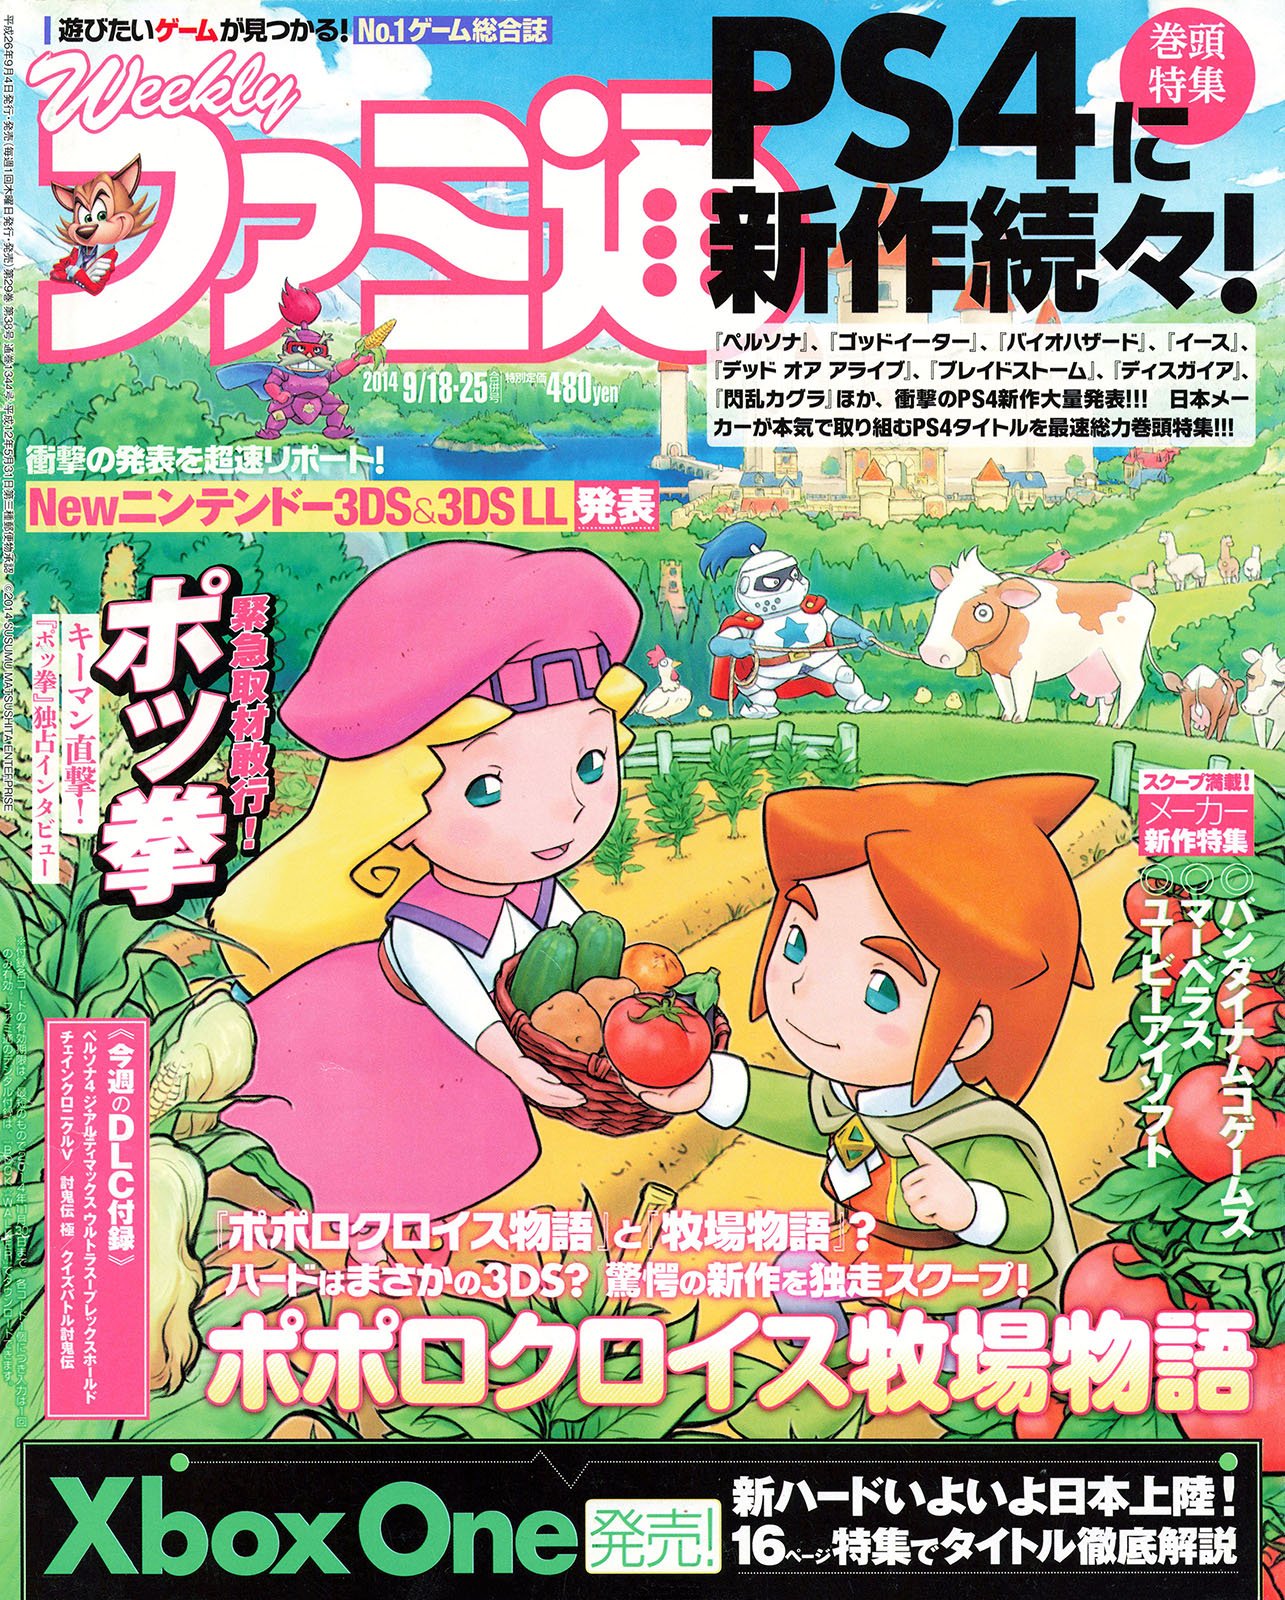 Famitsu Issue 1344 (September 18/25, 2014)